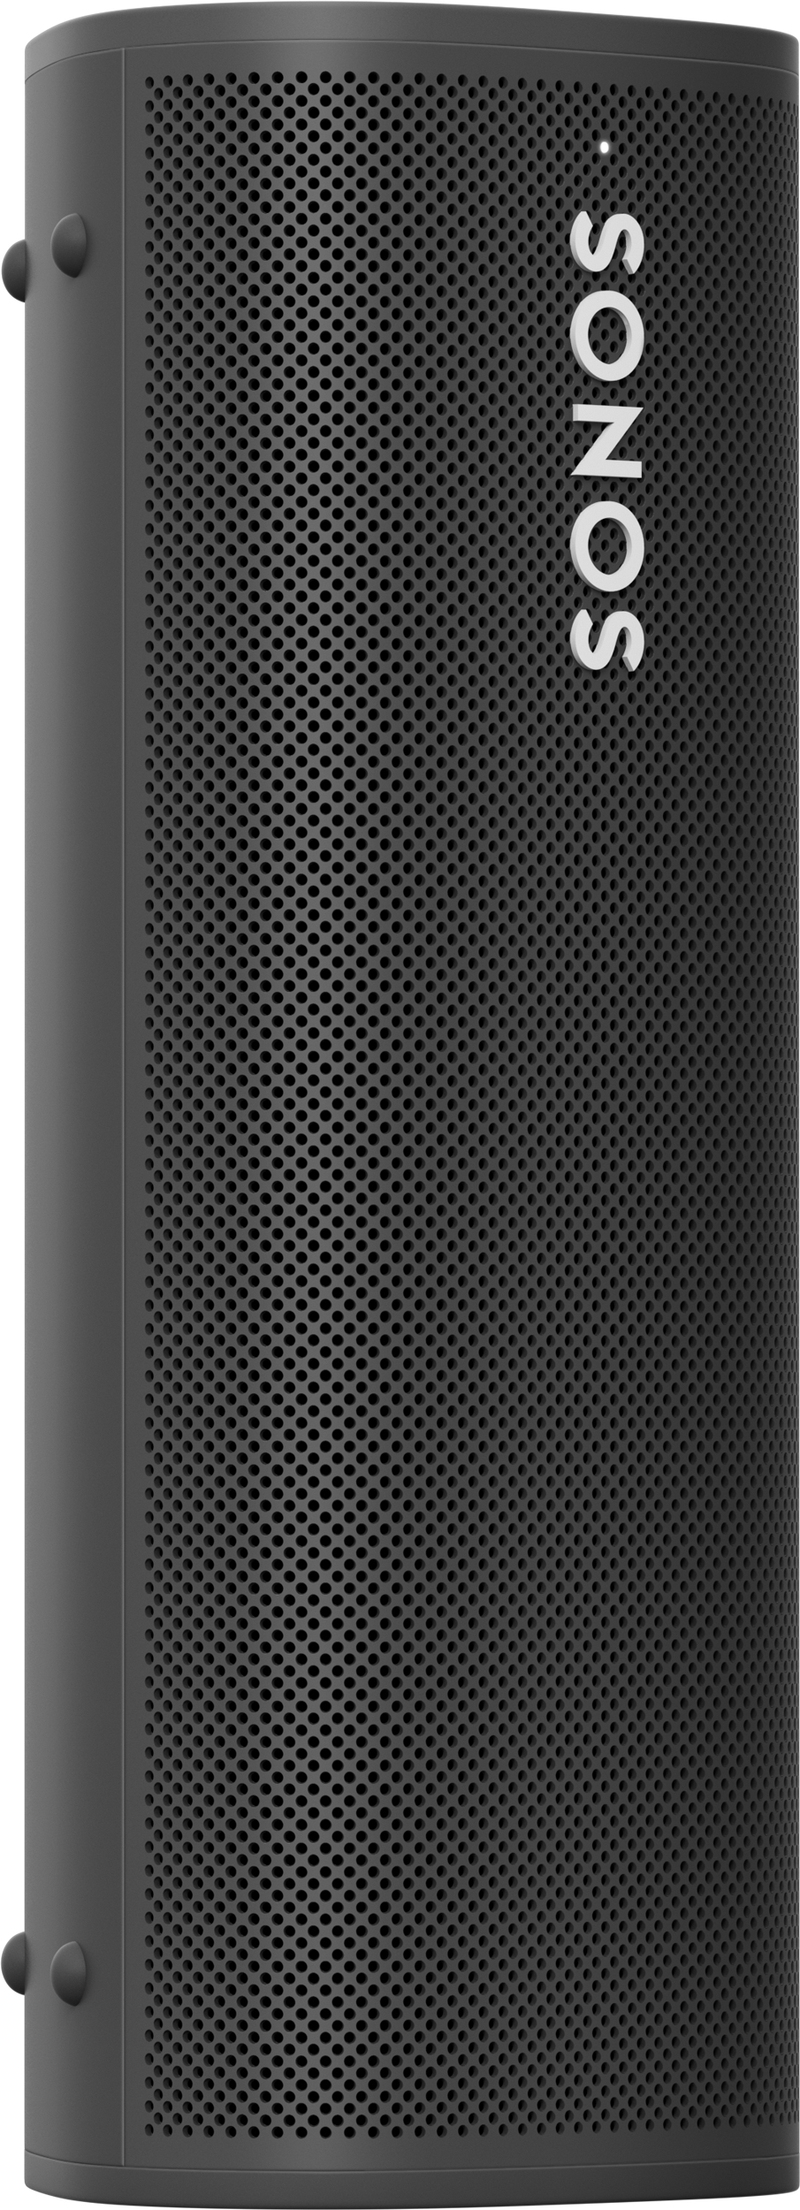 Sonos Roam Shadow Black Smart Speaker - Black